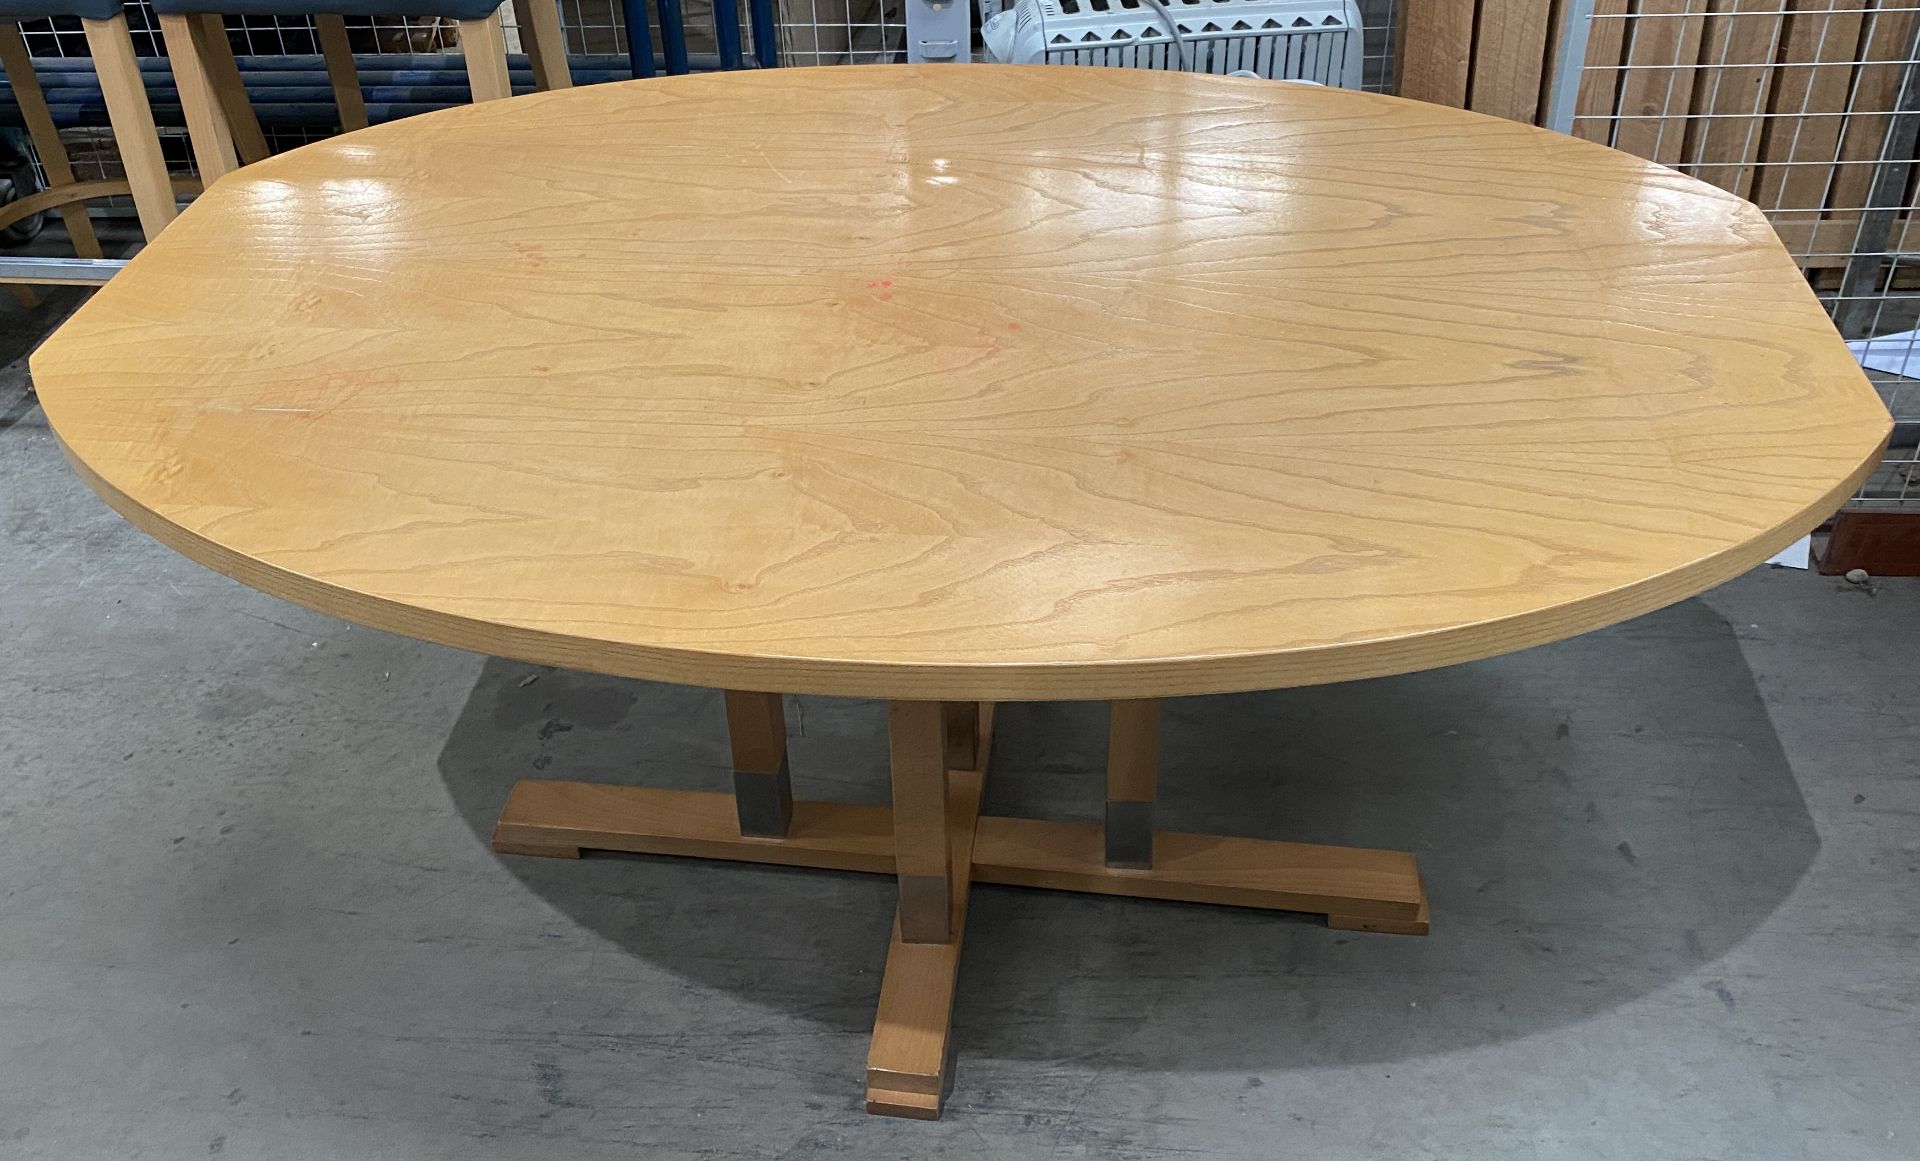 2 x Oval Oak Laminate Square Ended Dining Tables on 4 Leg Base - 100cm x 145cm